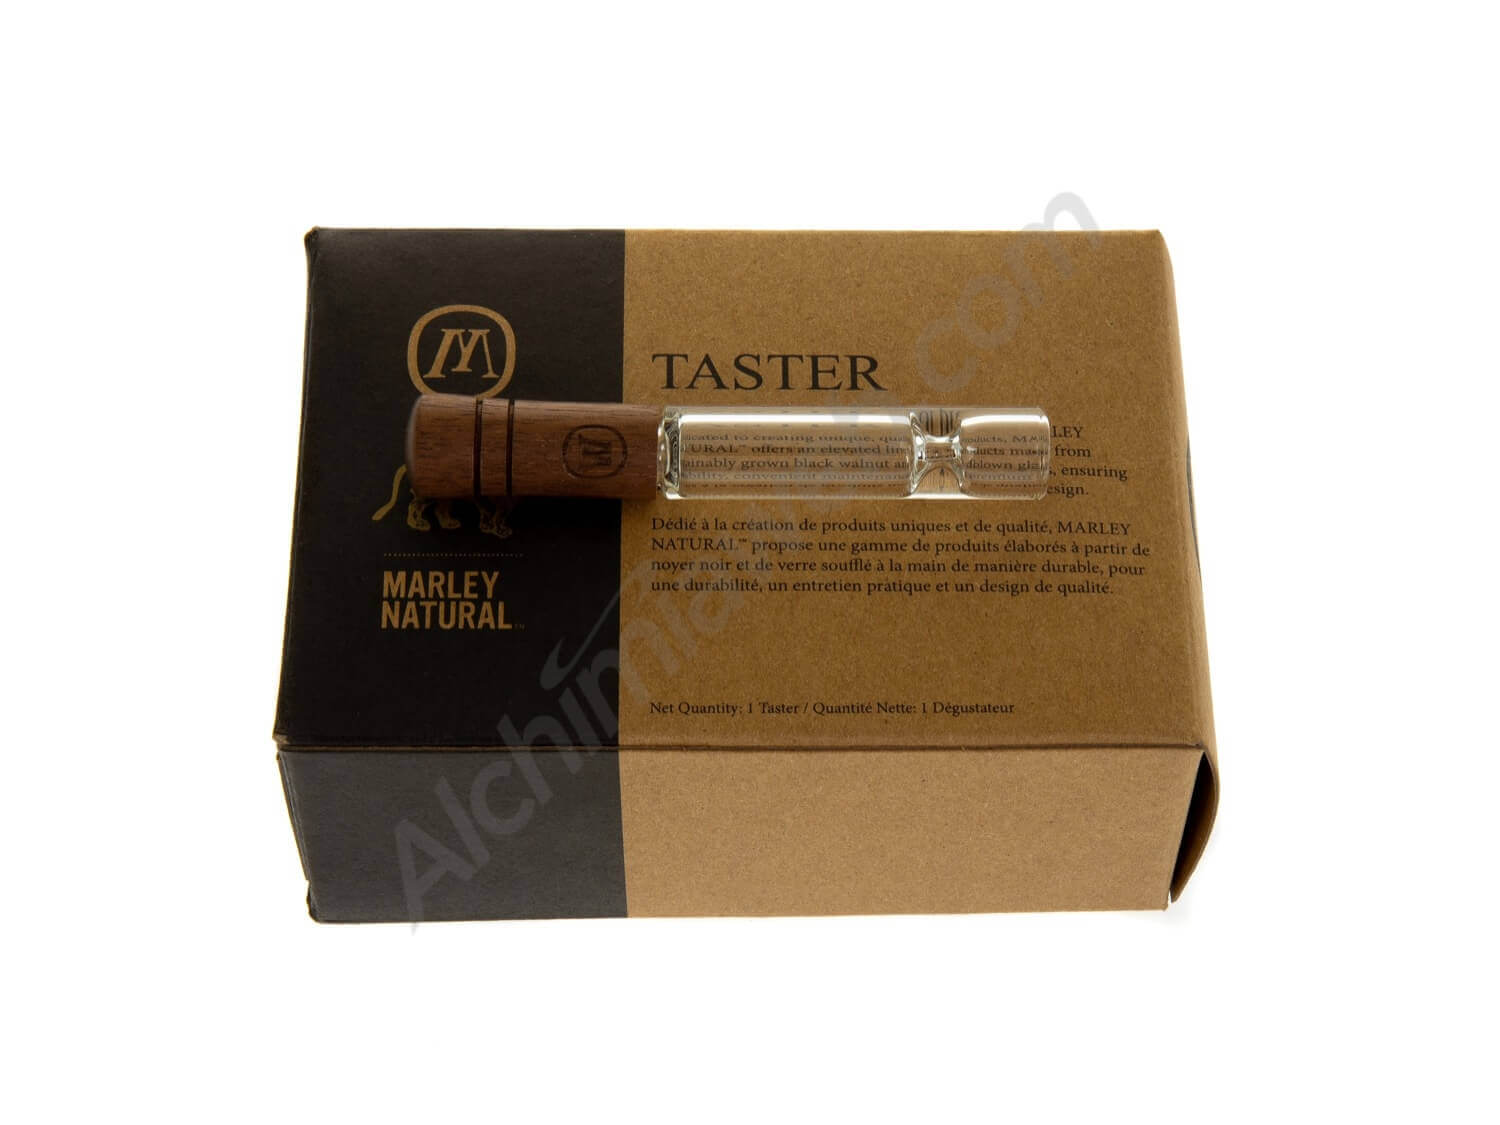 Sale of Taster pocket pipe by Marley Natural